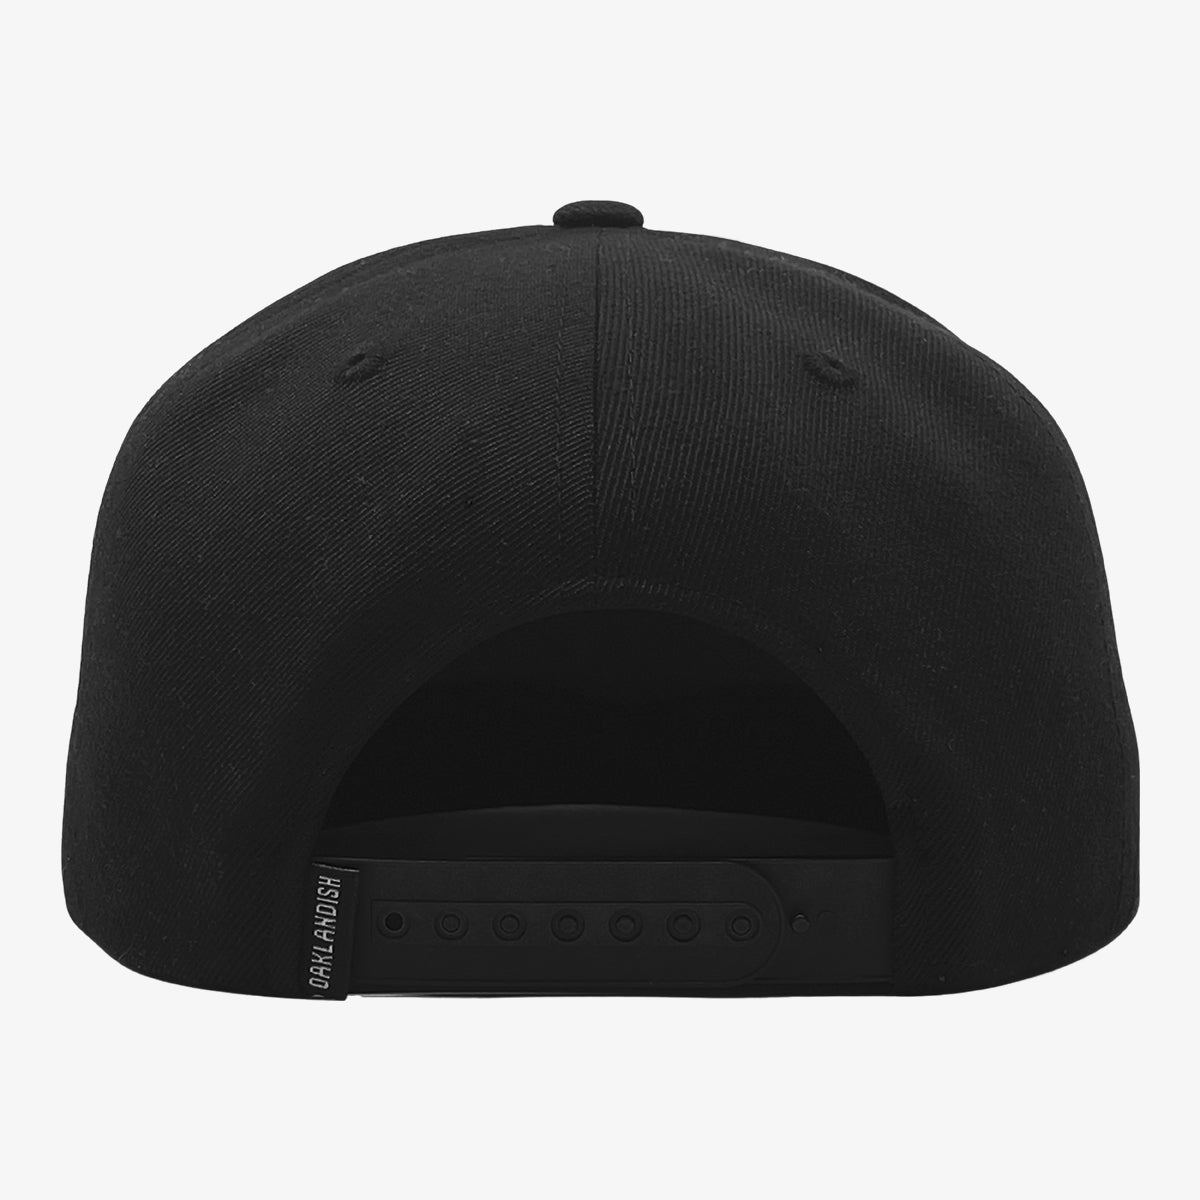 Back of black cap with black plastic snap back closure.